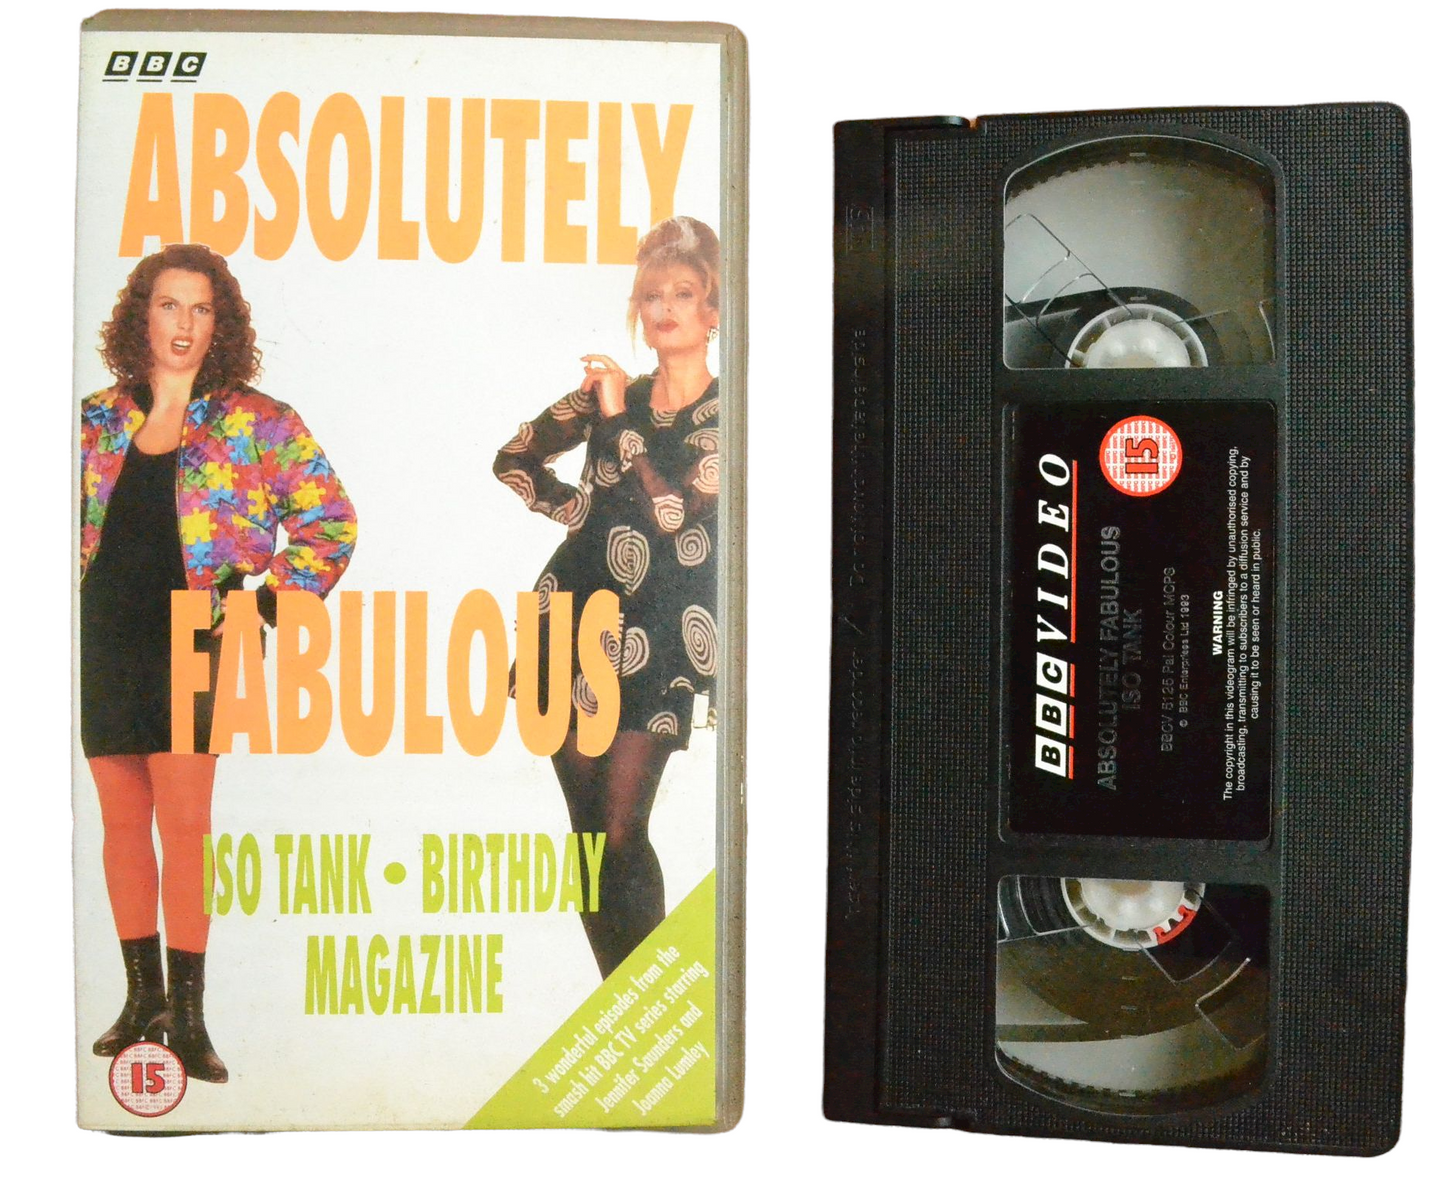 Absolutely fabulous (Iso Tank, Birthday, Magazine) - Jennifer Saunders - BBC - Vintage - Pal VHS-